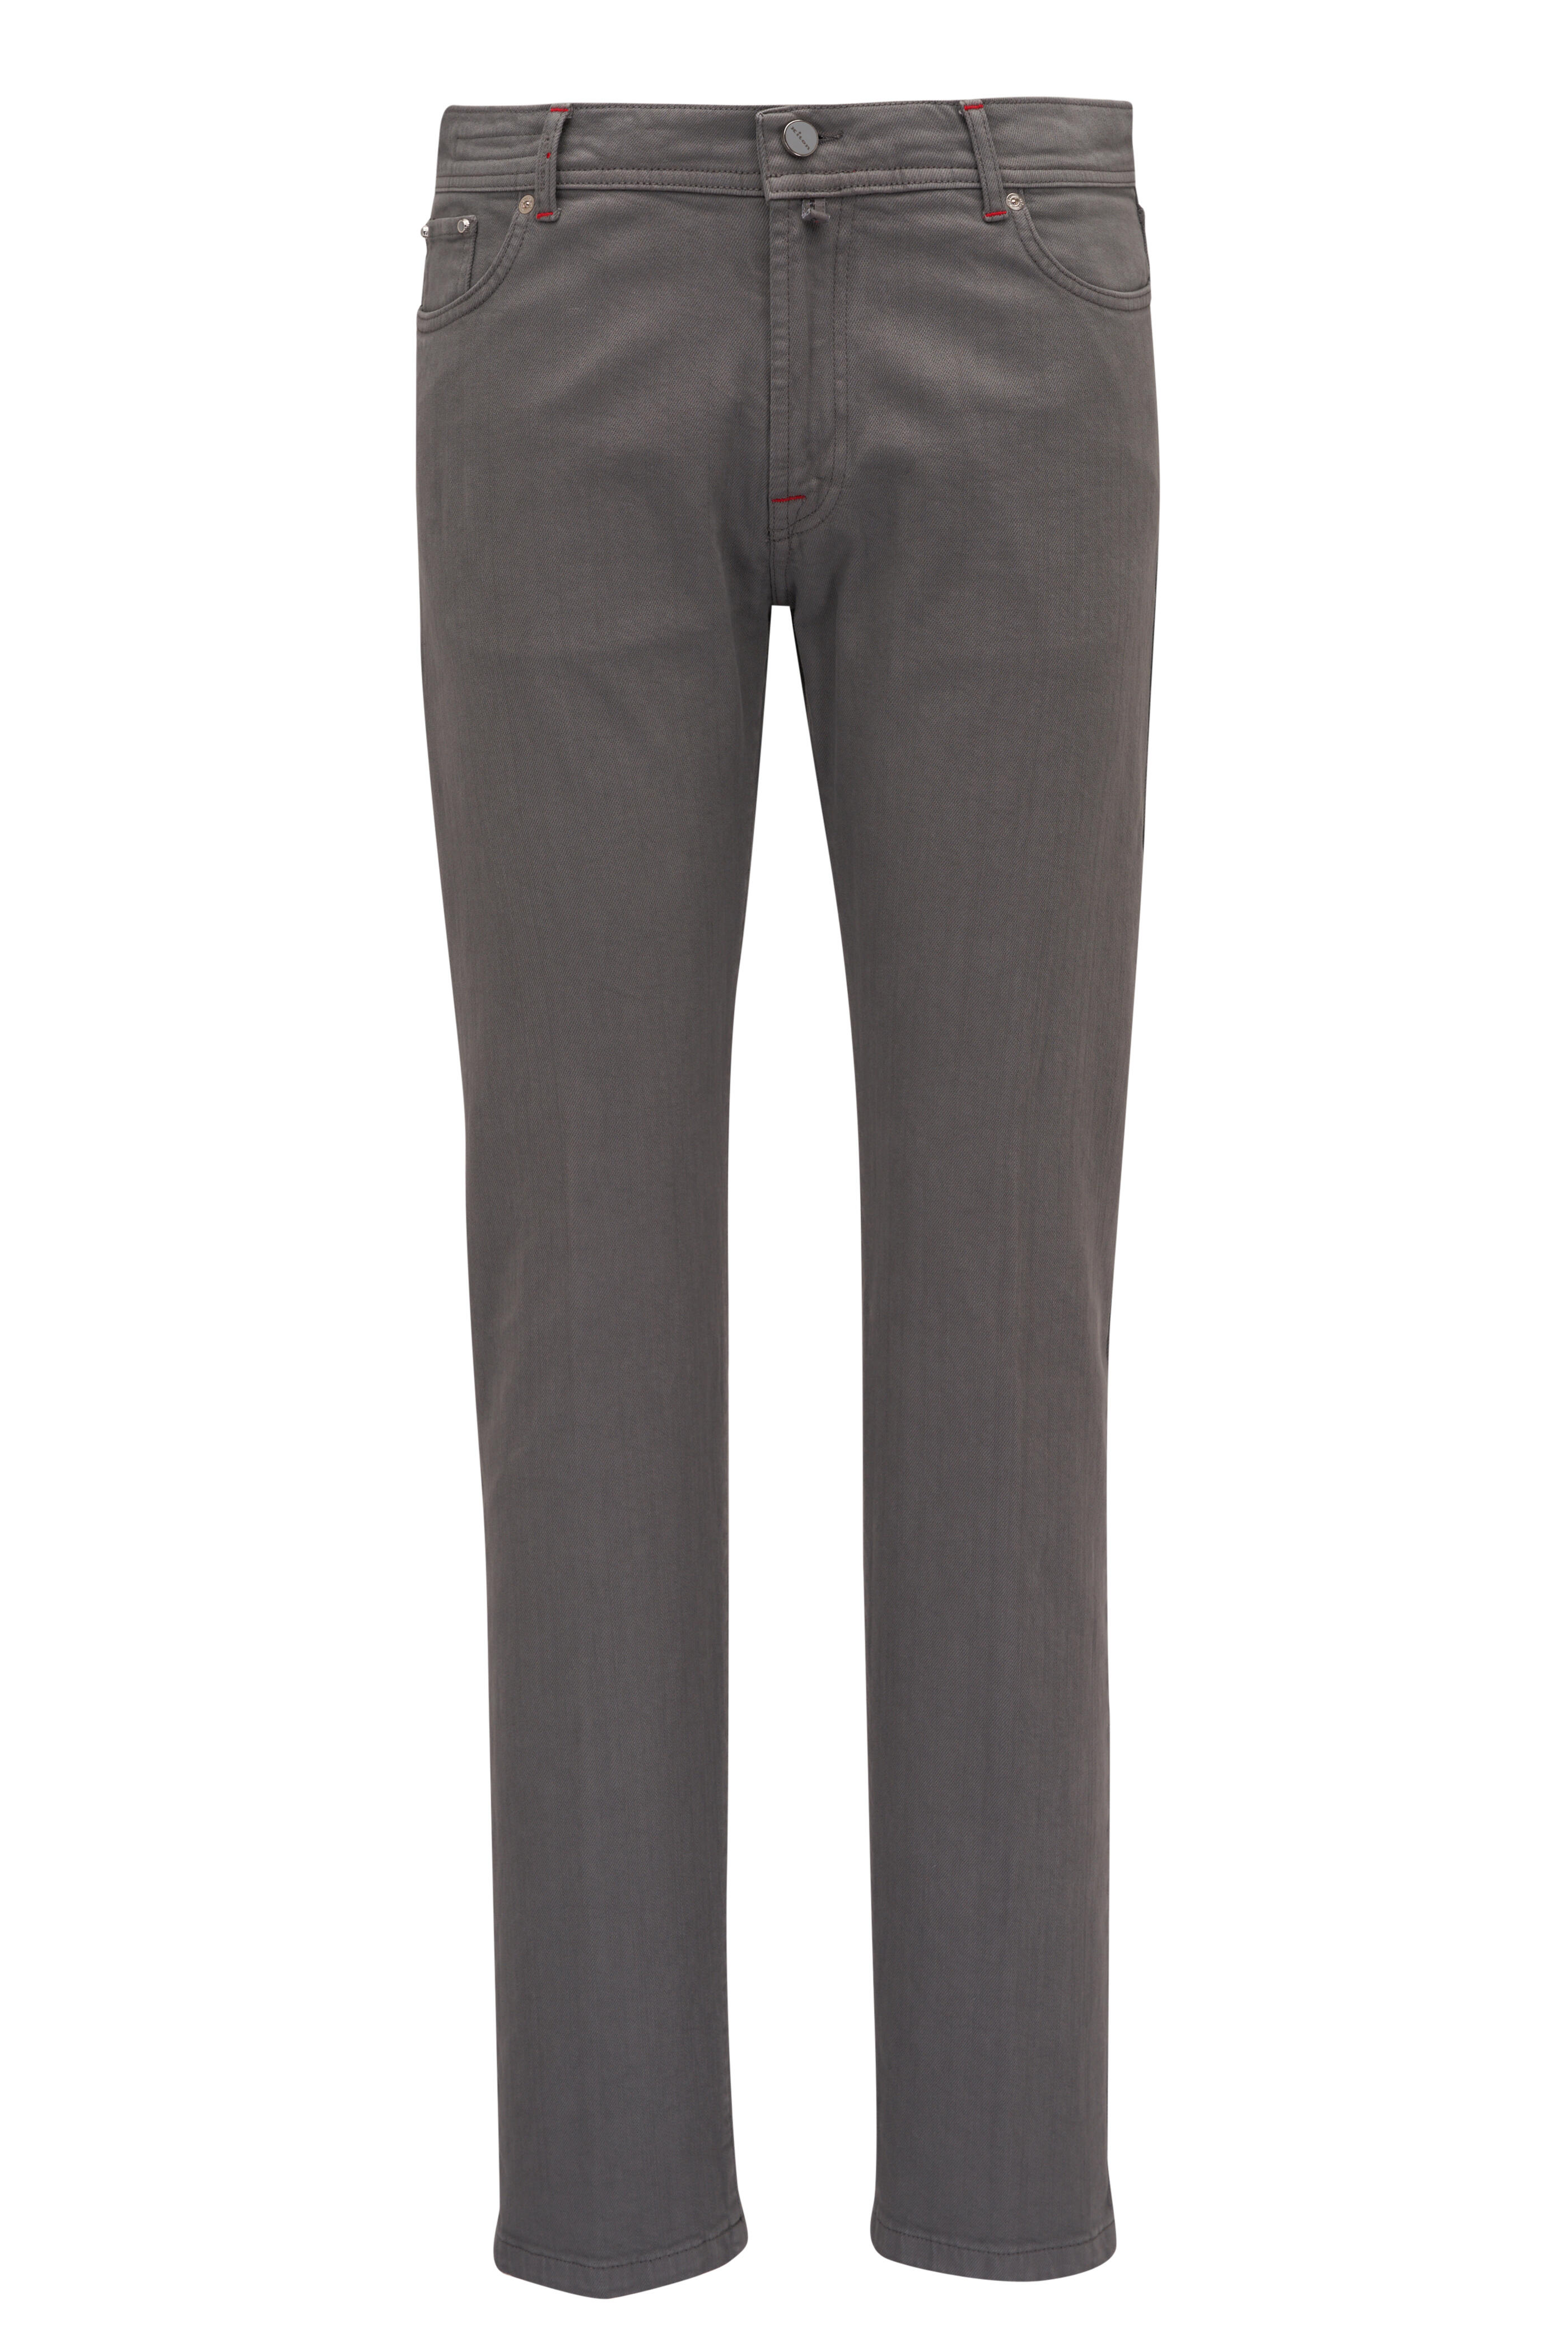 Kiton - Light Gray Cotton Five Pocket Jean | Mitchell Stores